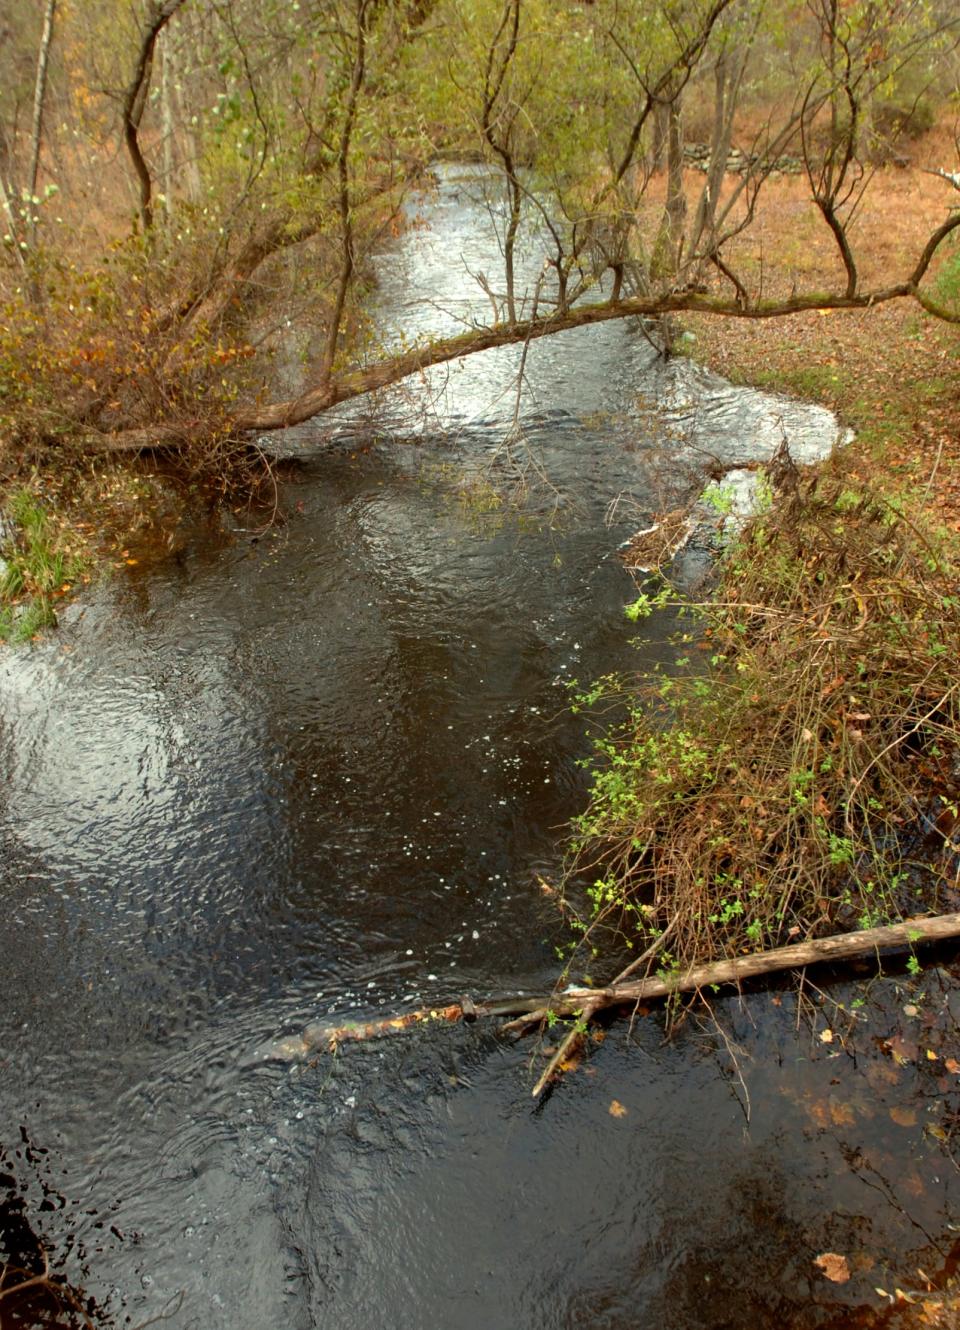 Sambo Creek runs beneath Fawn Road near East Stroudsburg on Oct. 20, 2011.